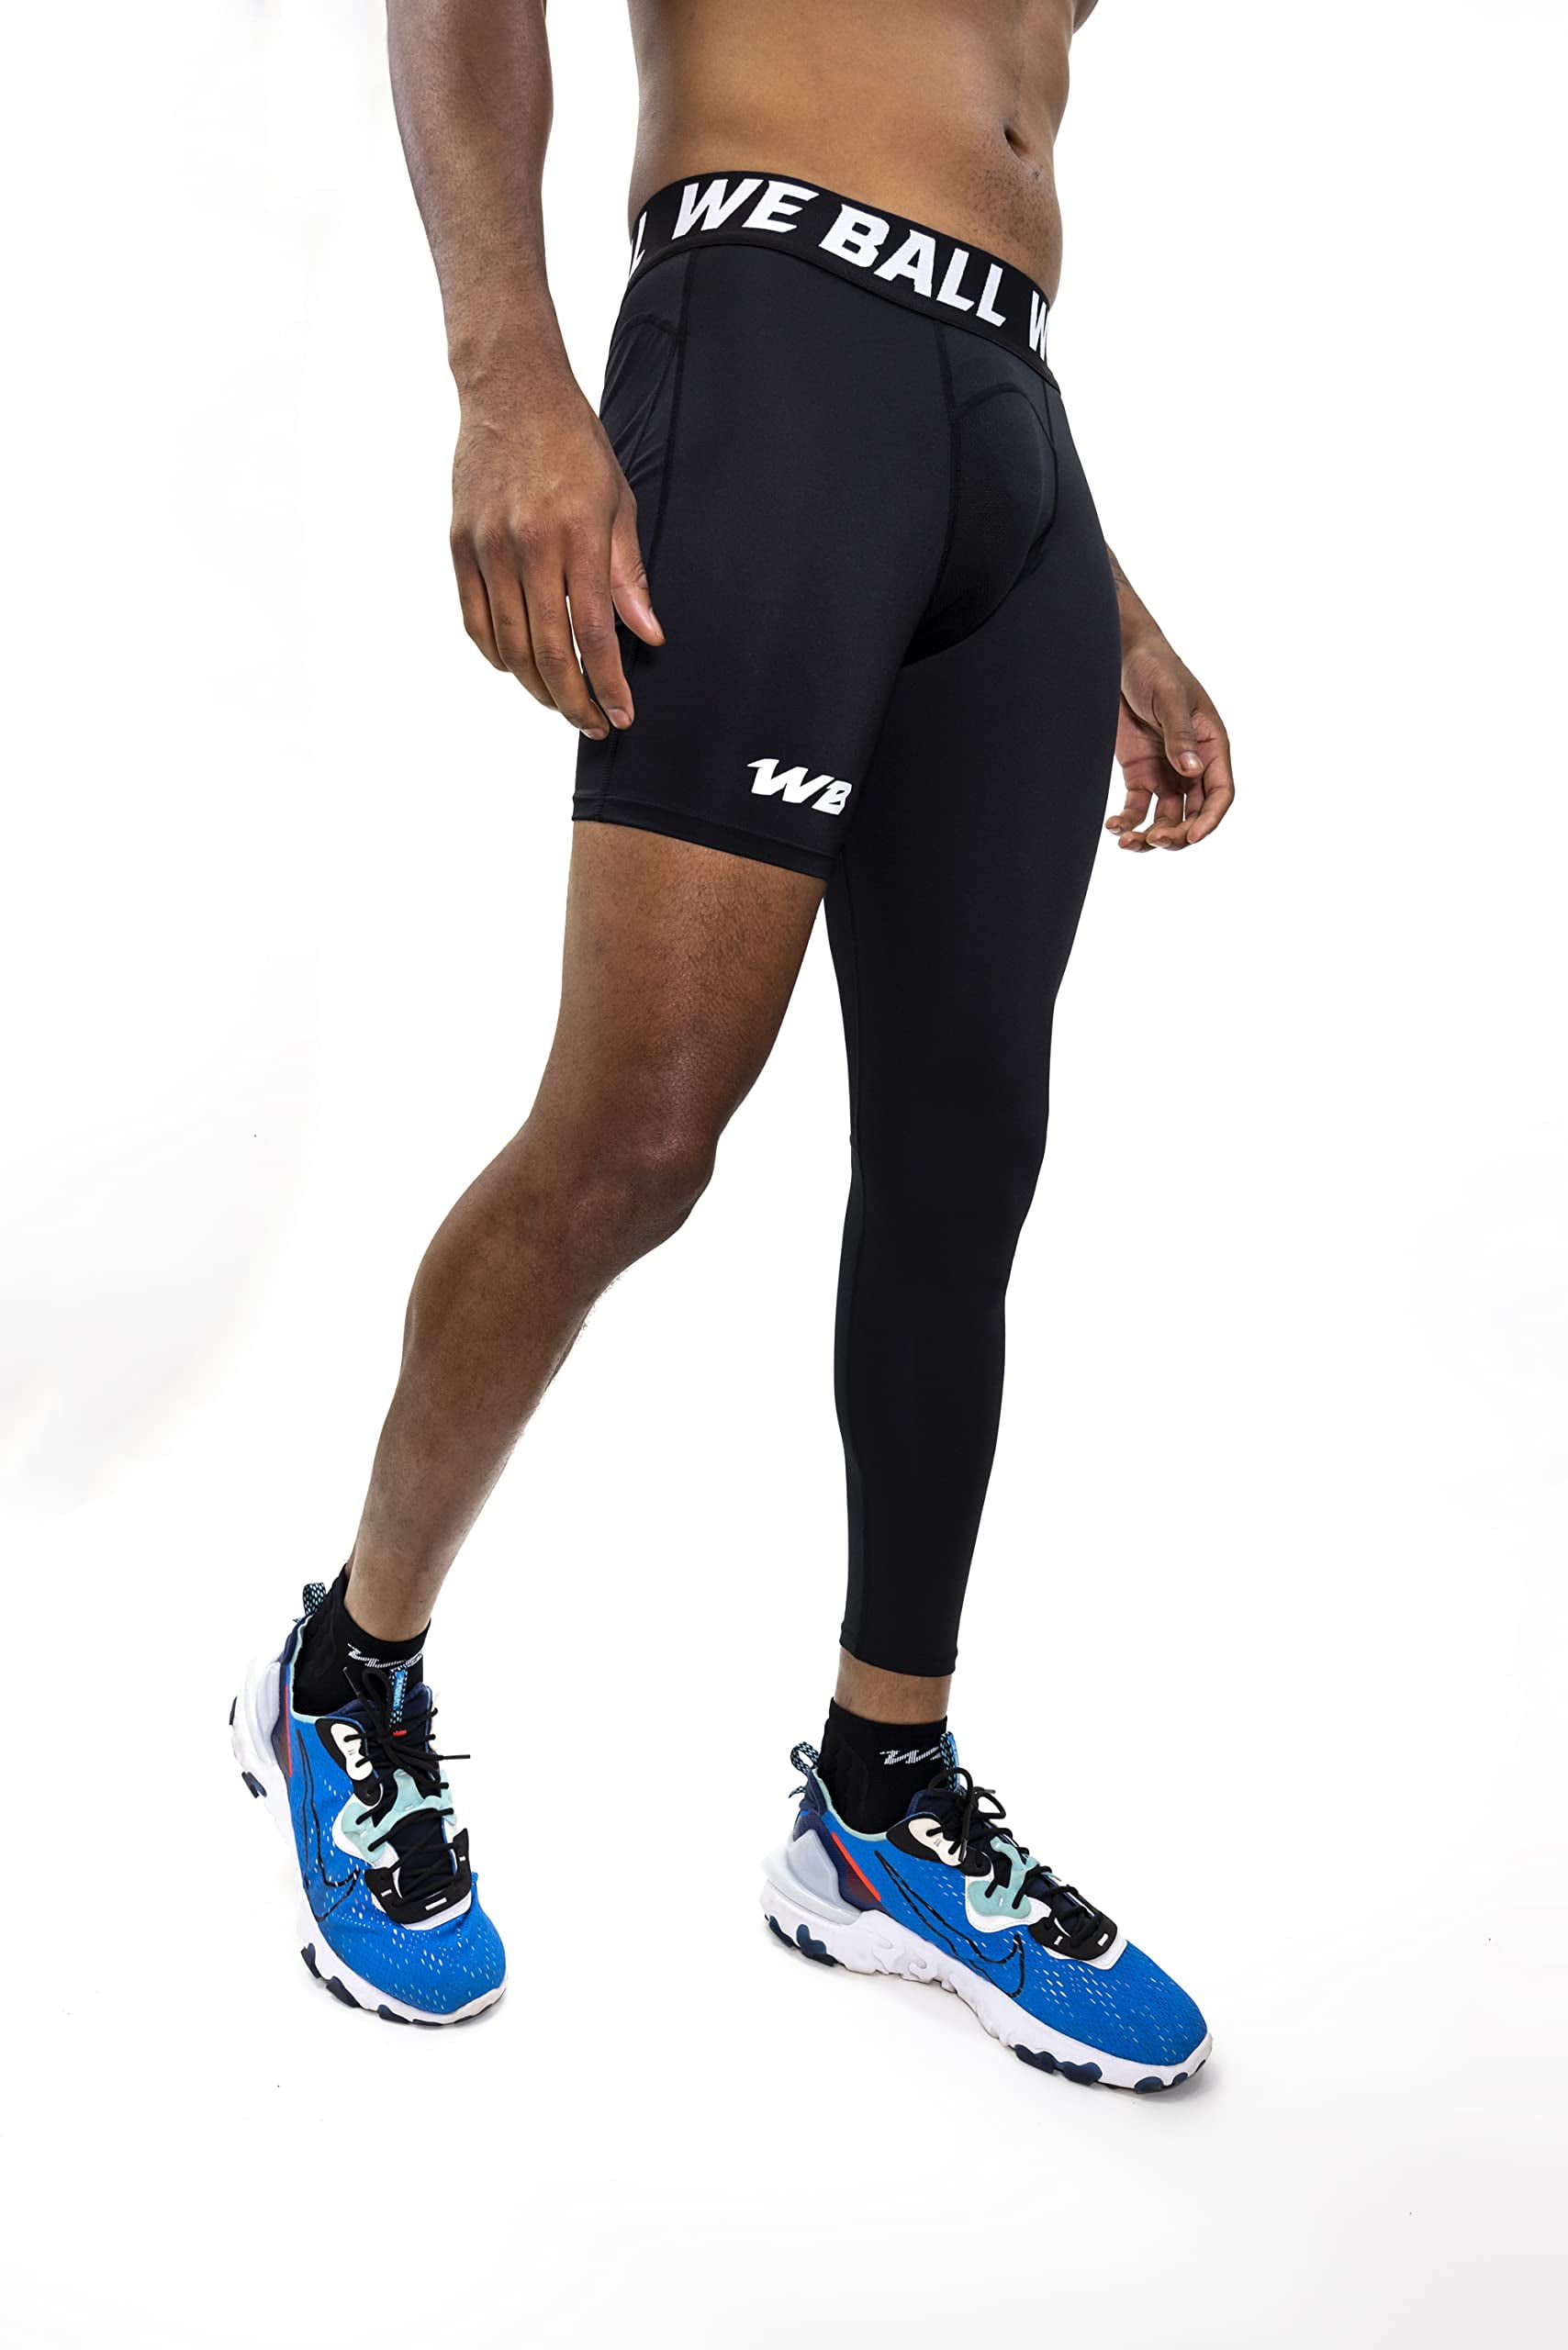 We Ball Sports Athletic Men's Single Leg Sports Tights | One Leg  Compression Base Layer Leggings for Men (White, Full M)